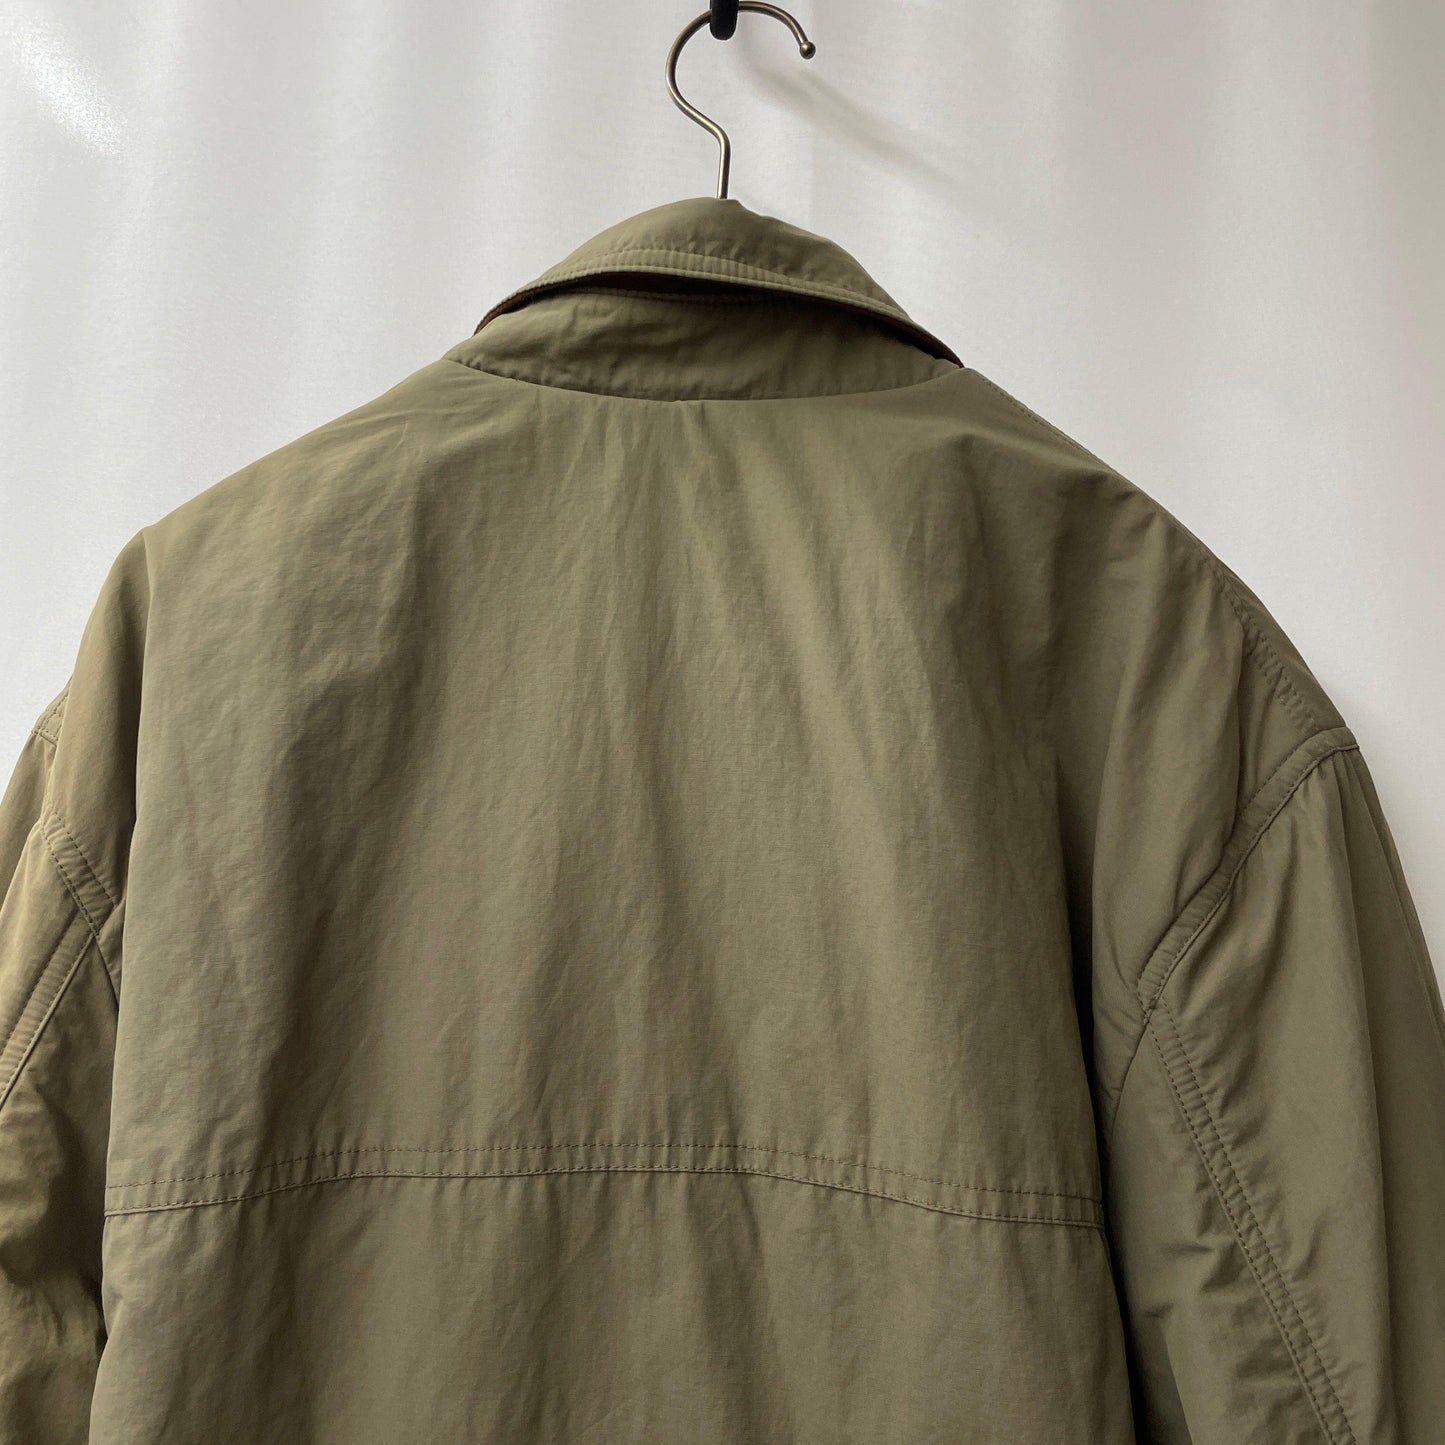 burberry jacket coatreversible coat/jacket